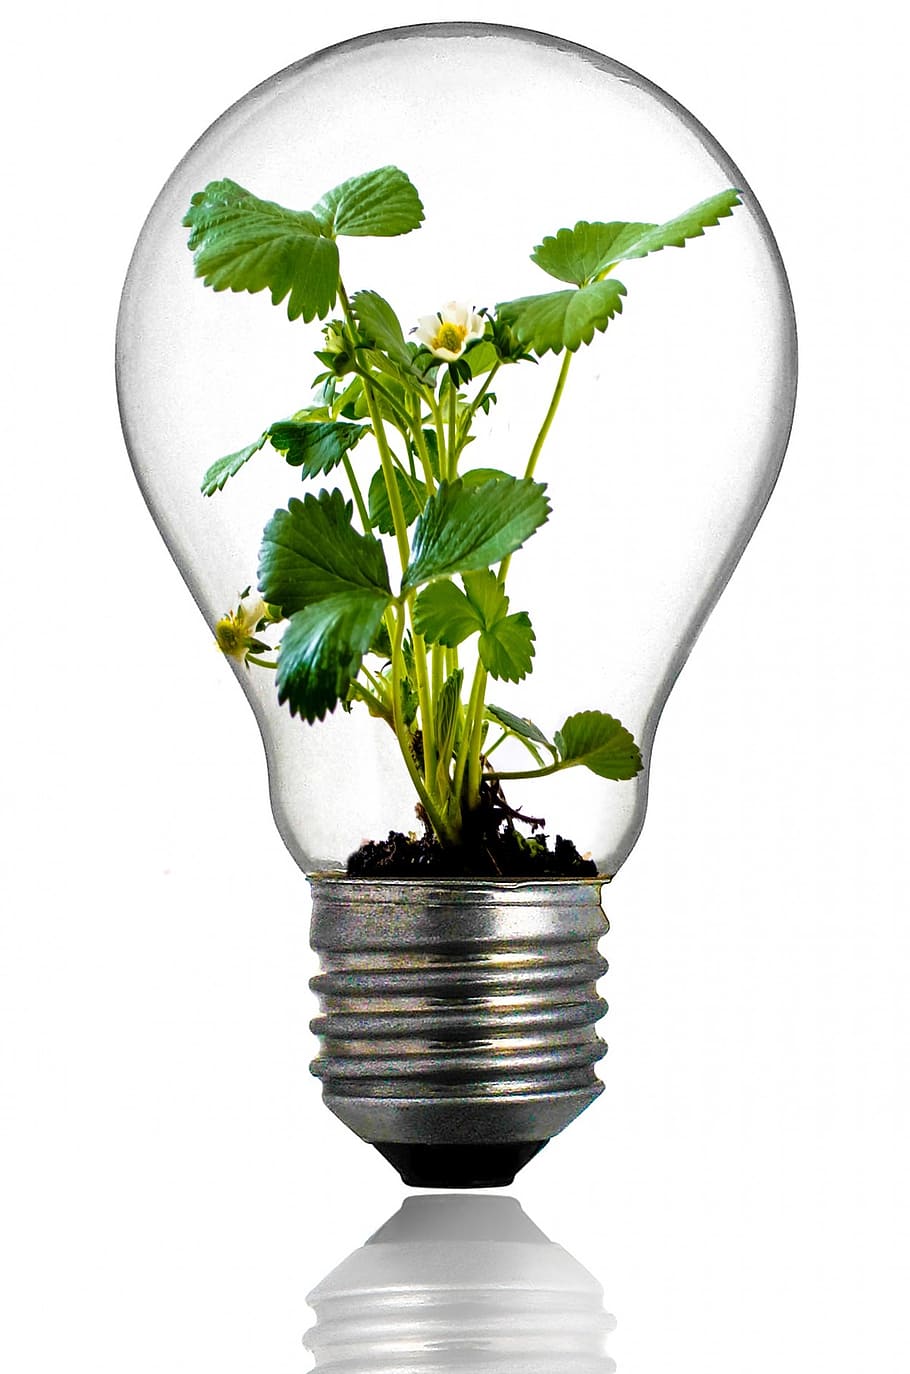 clear, glass bulb, green, plant, bulb, growth, light, leaf, global, savings